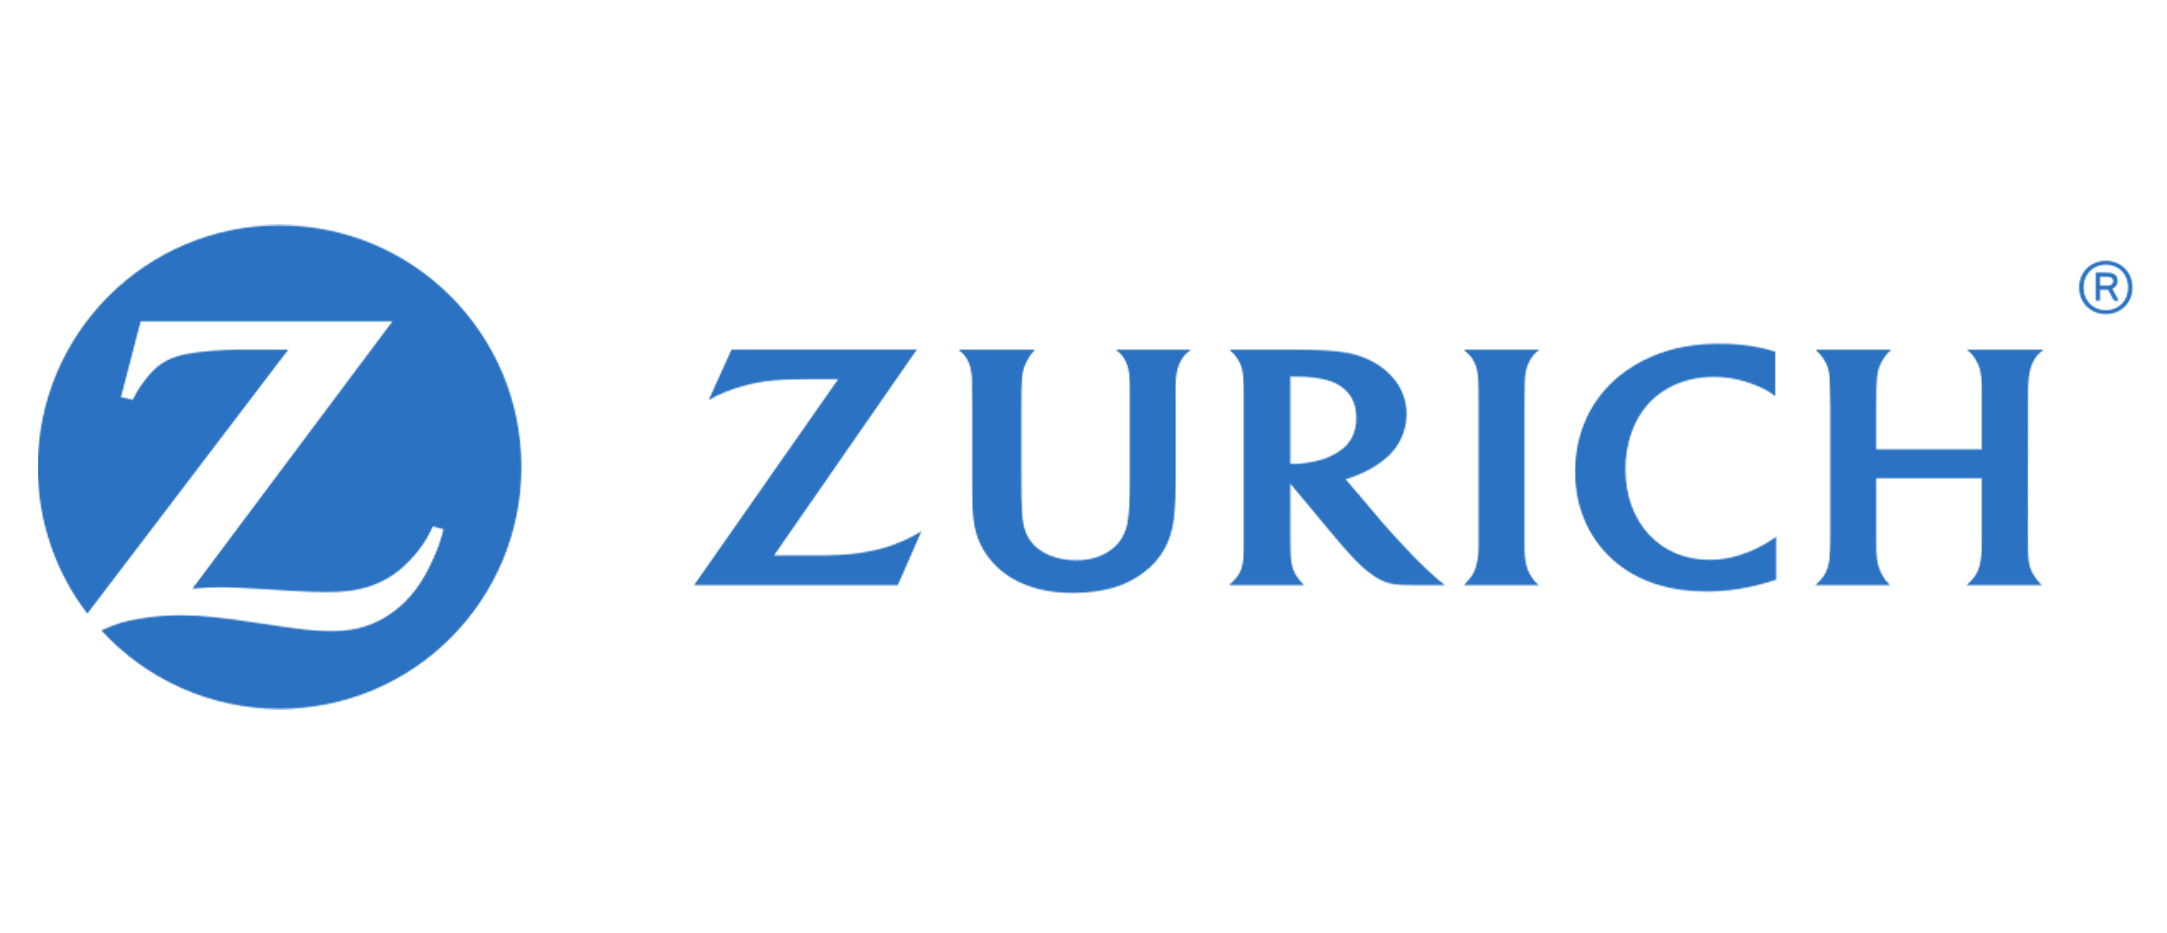 Zurich Insurance Group Logo